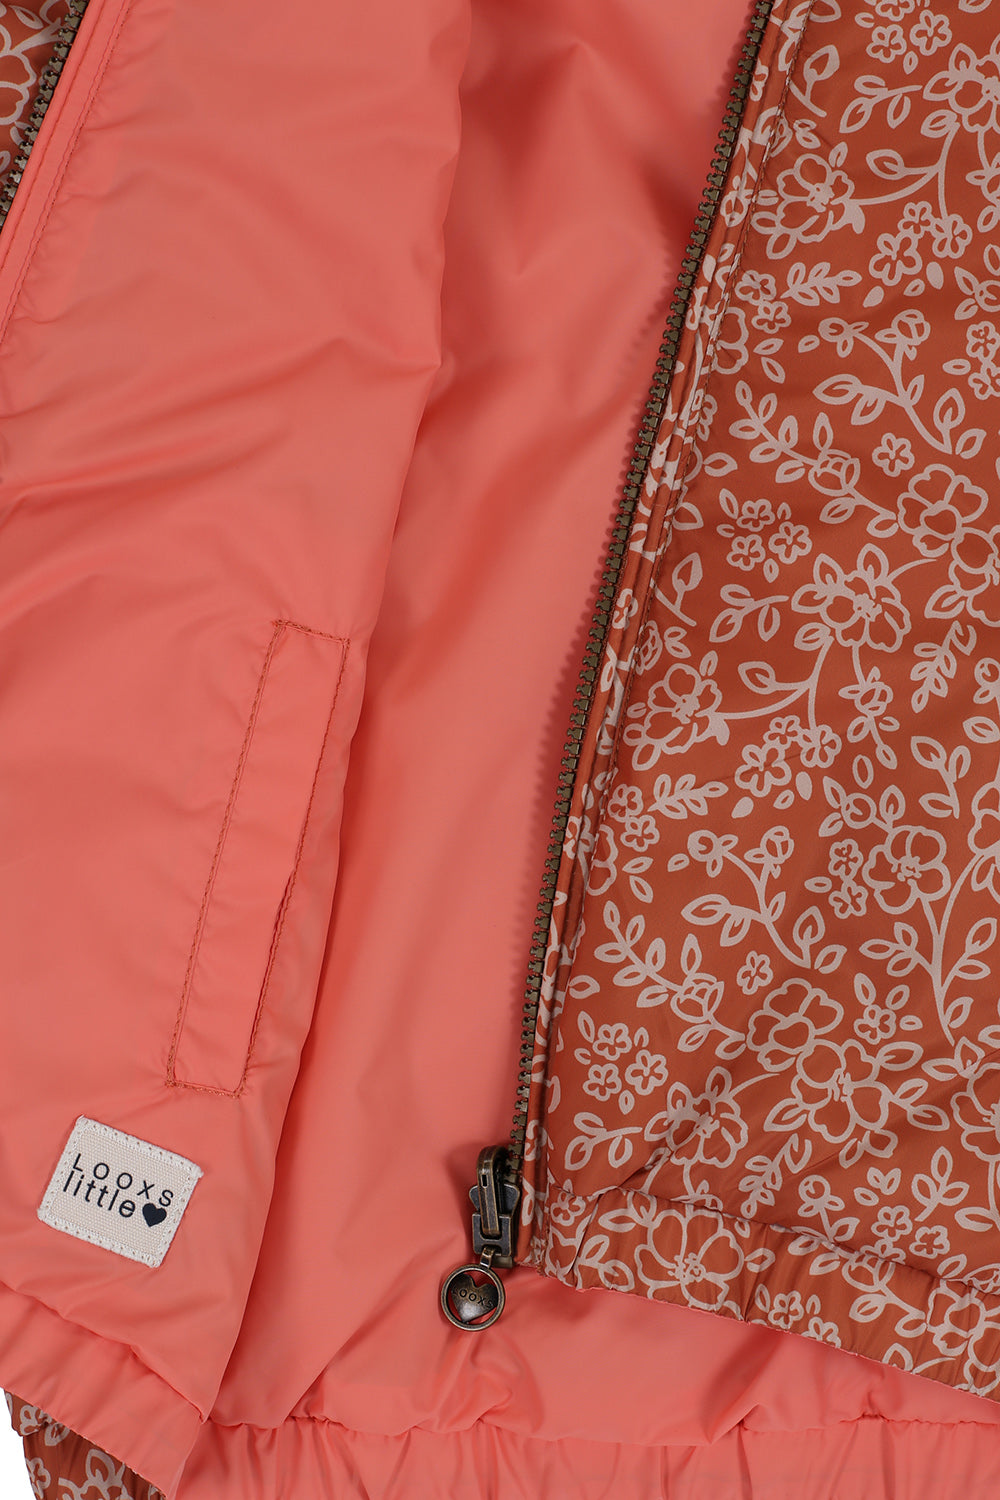 Meisjes Outerwear Jacket van LOOXS Little in de kleur Pecan Blossom AO in maat 128.